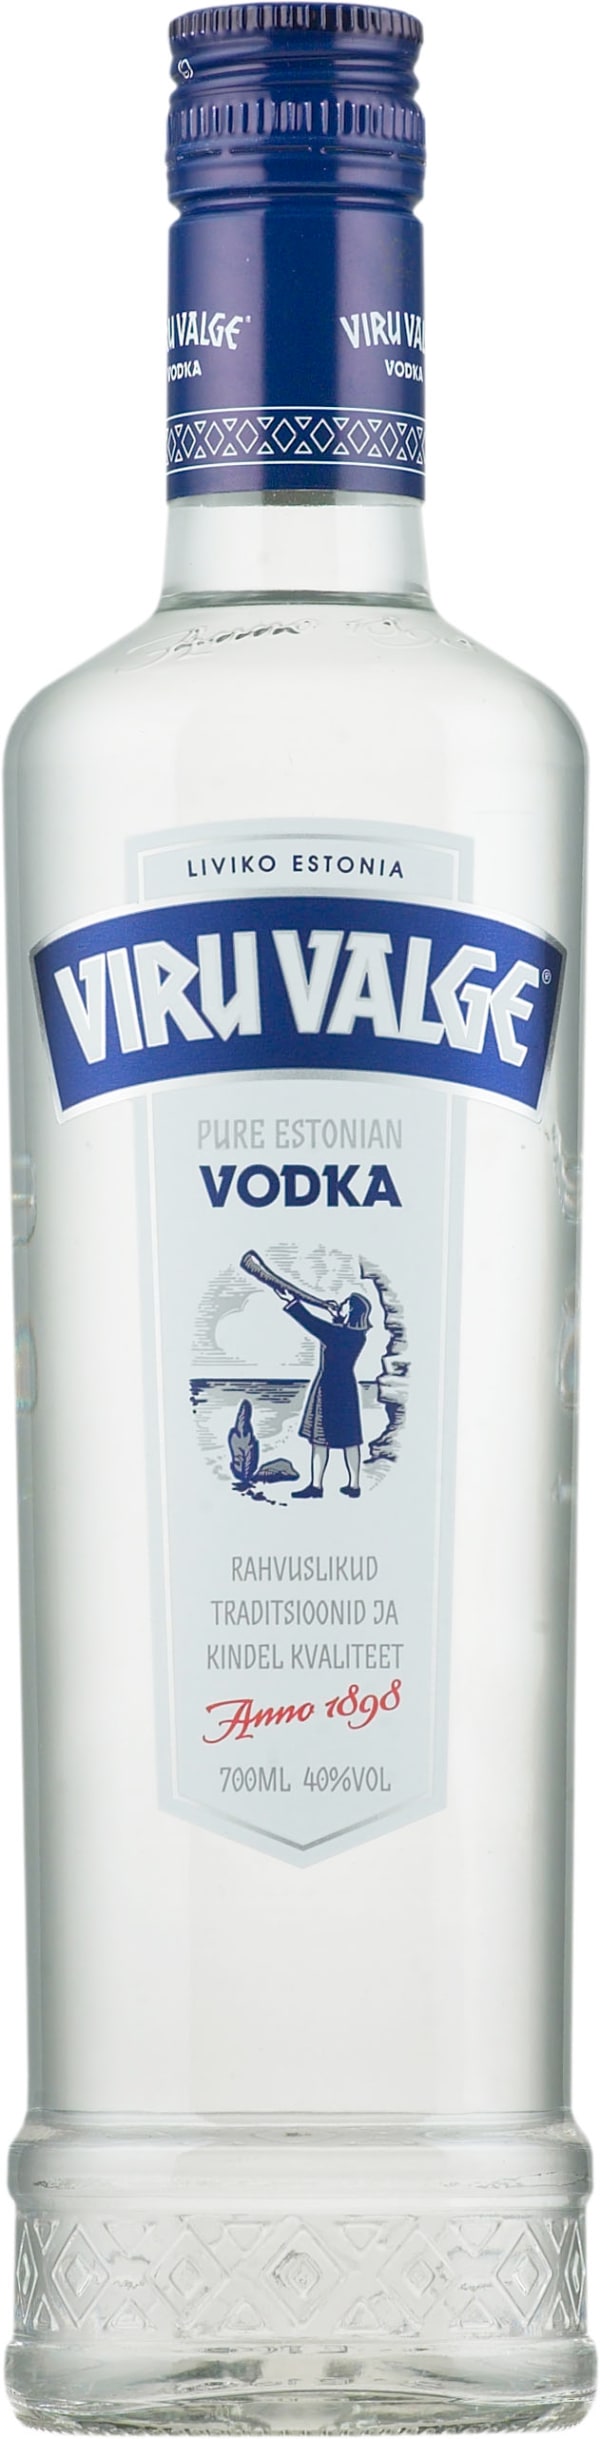 viru-valge-vodka.jpg